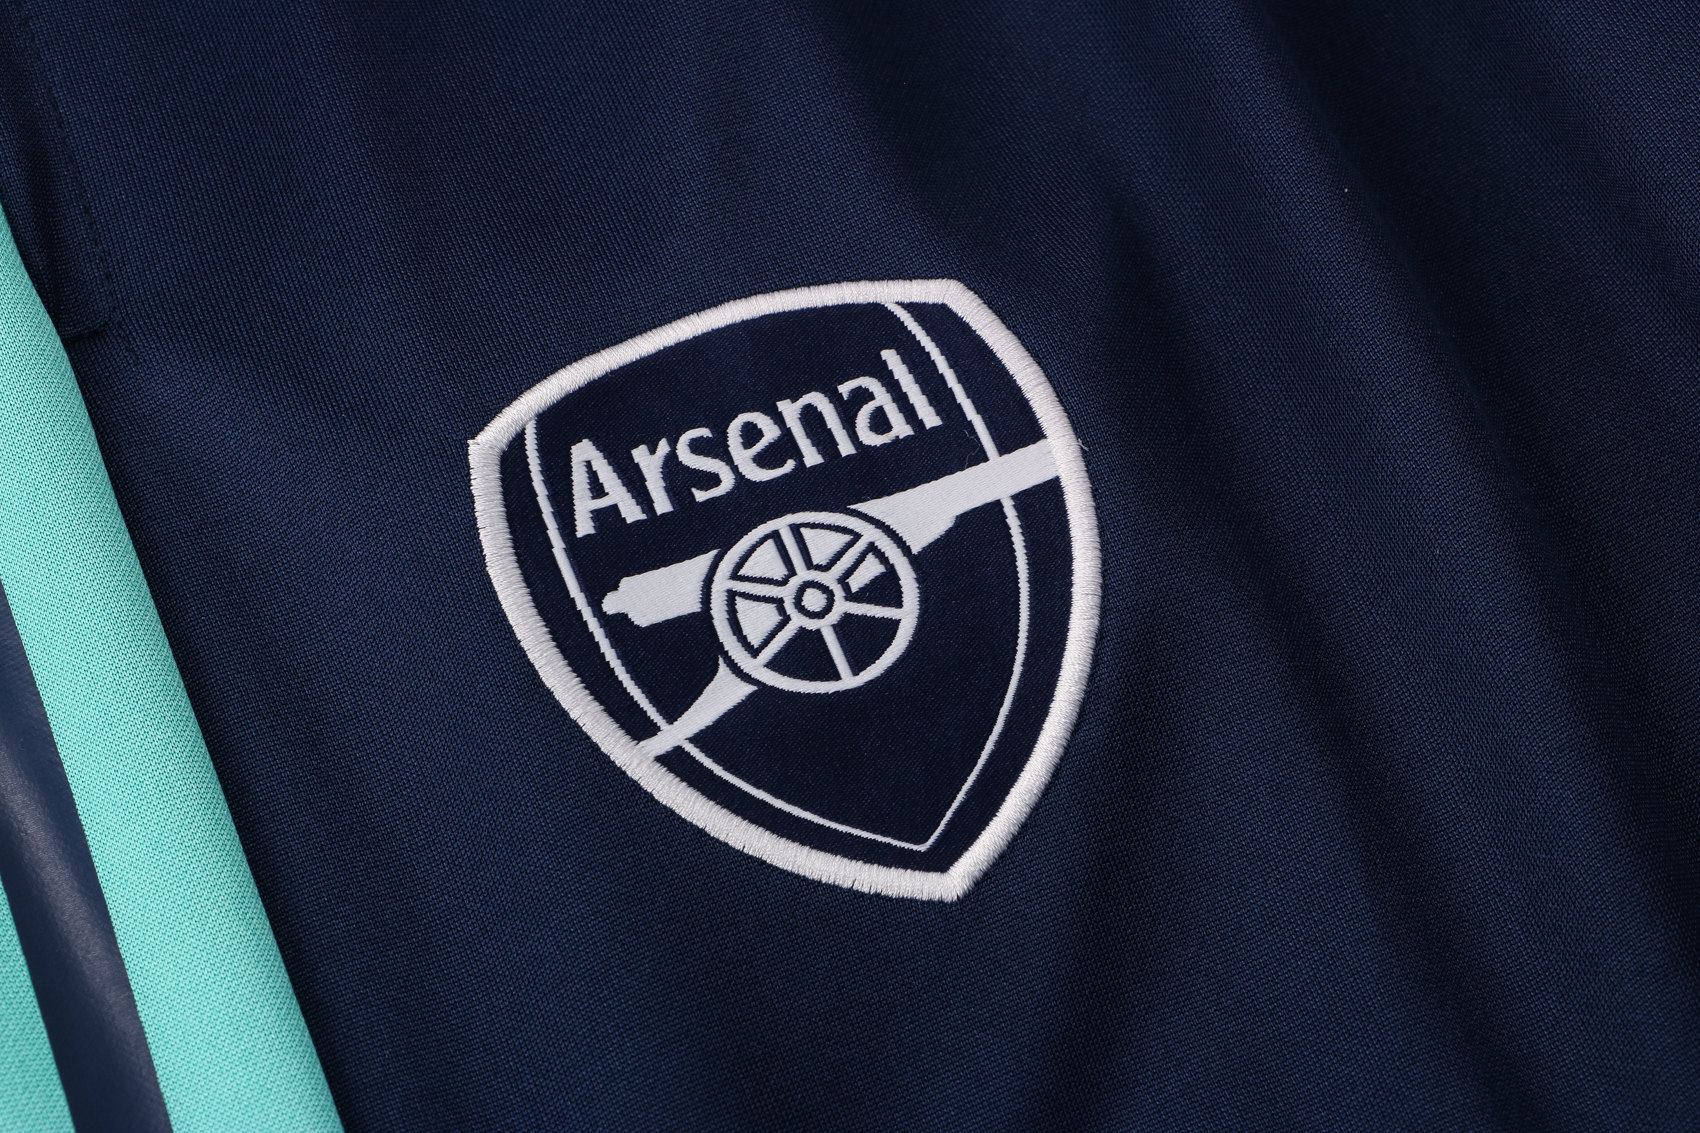 Arsenal Soccer Training Suit Jacket + Pants Navy Mens 2021/22